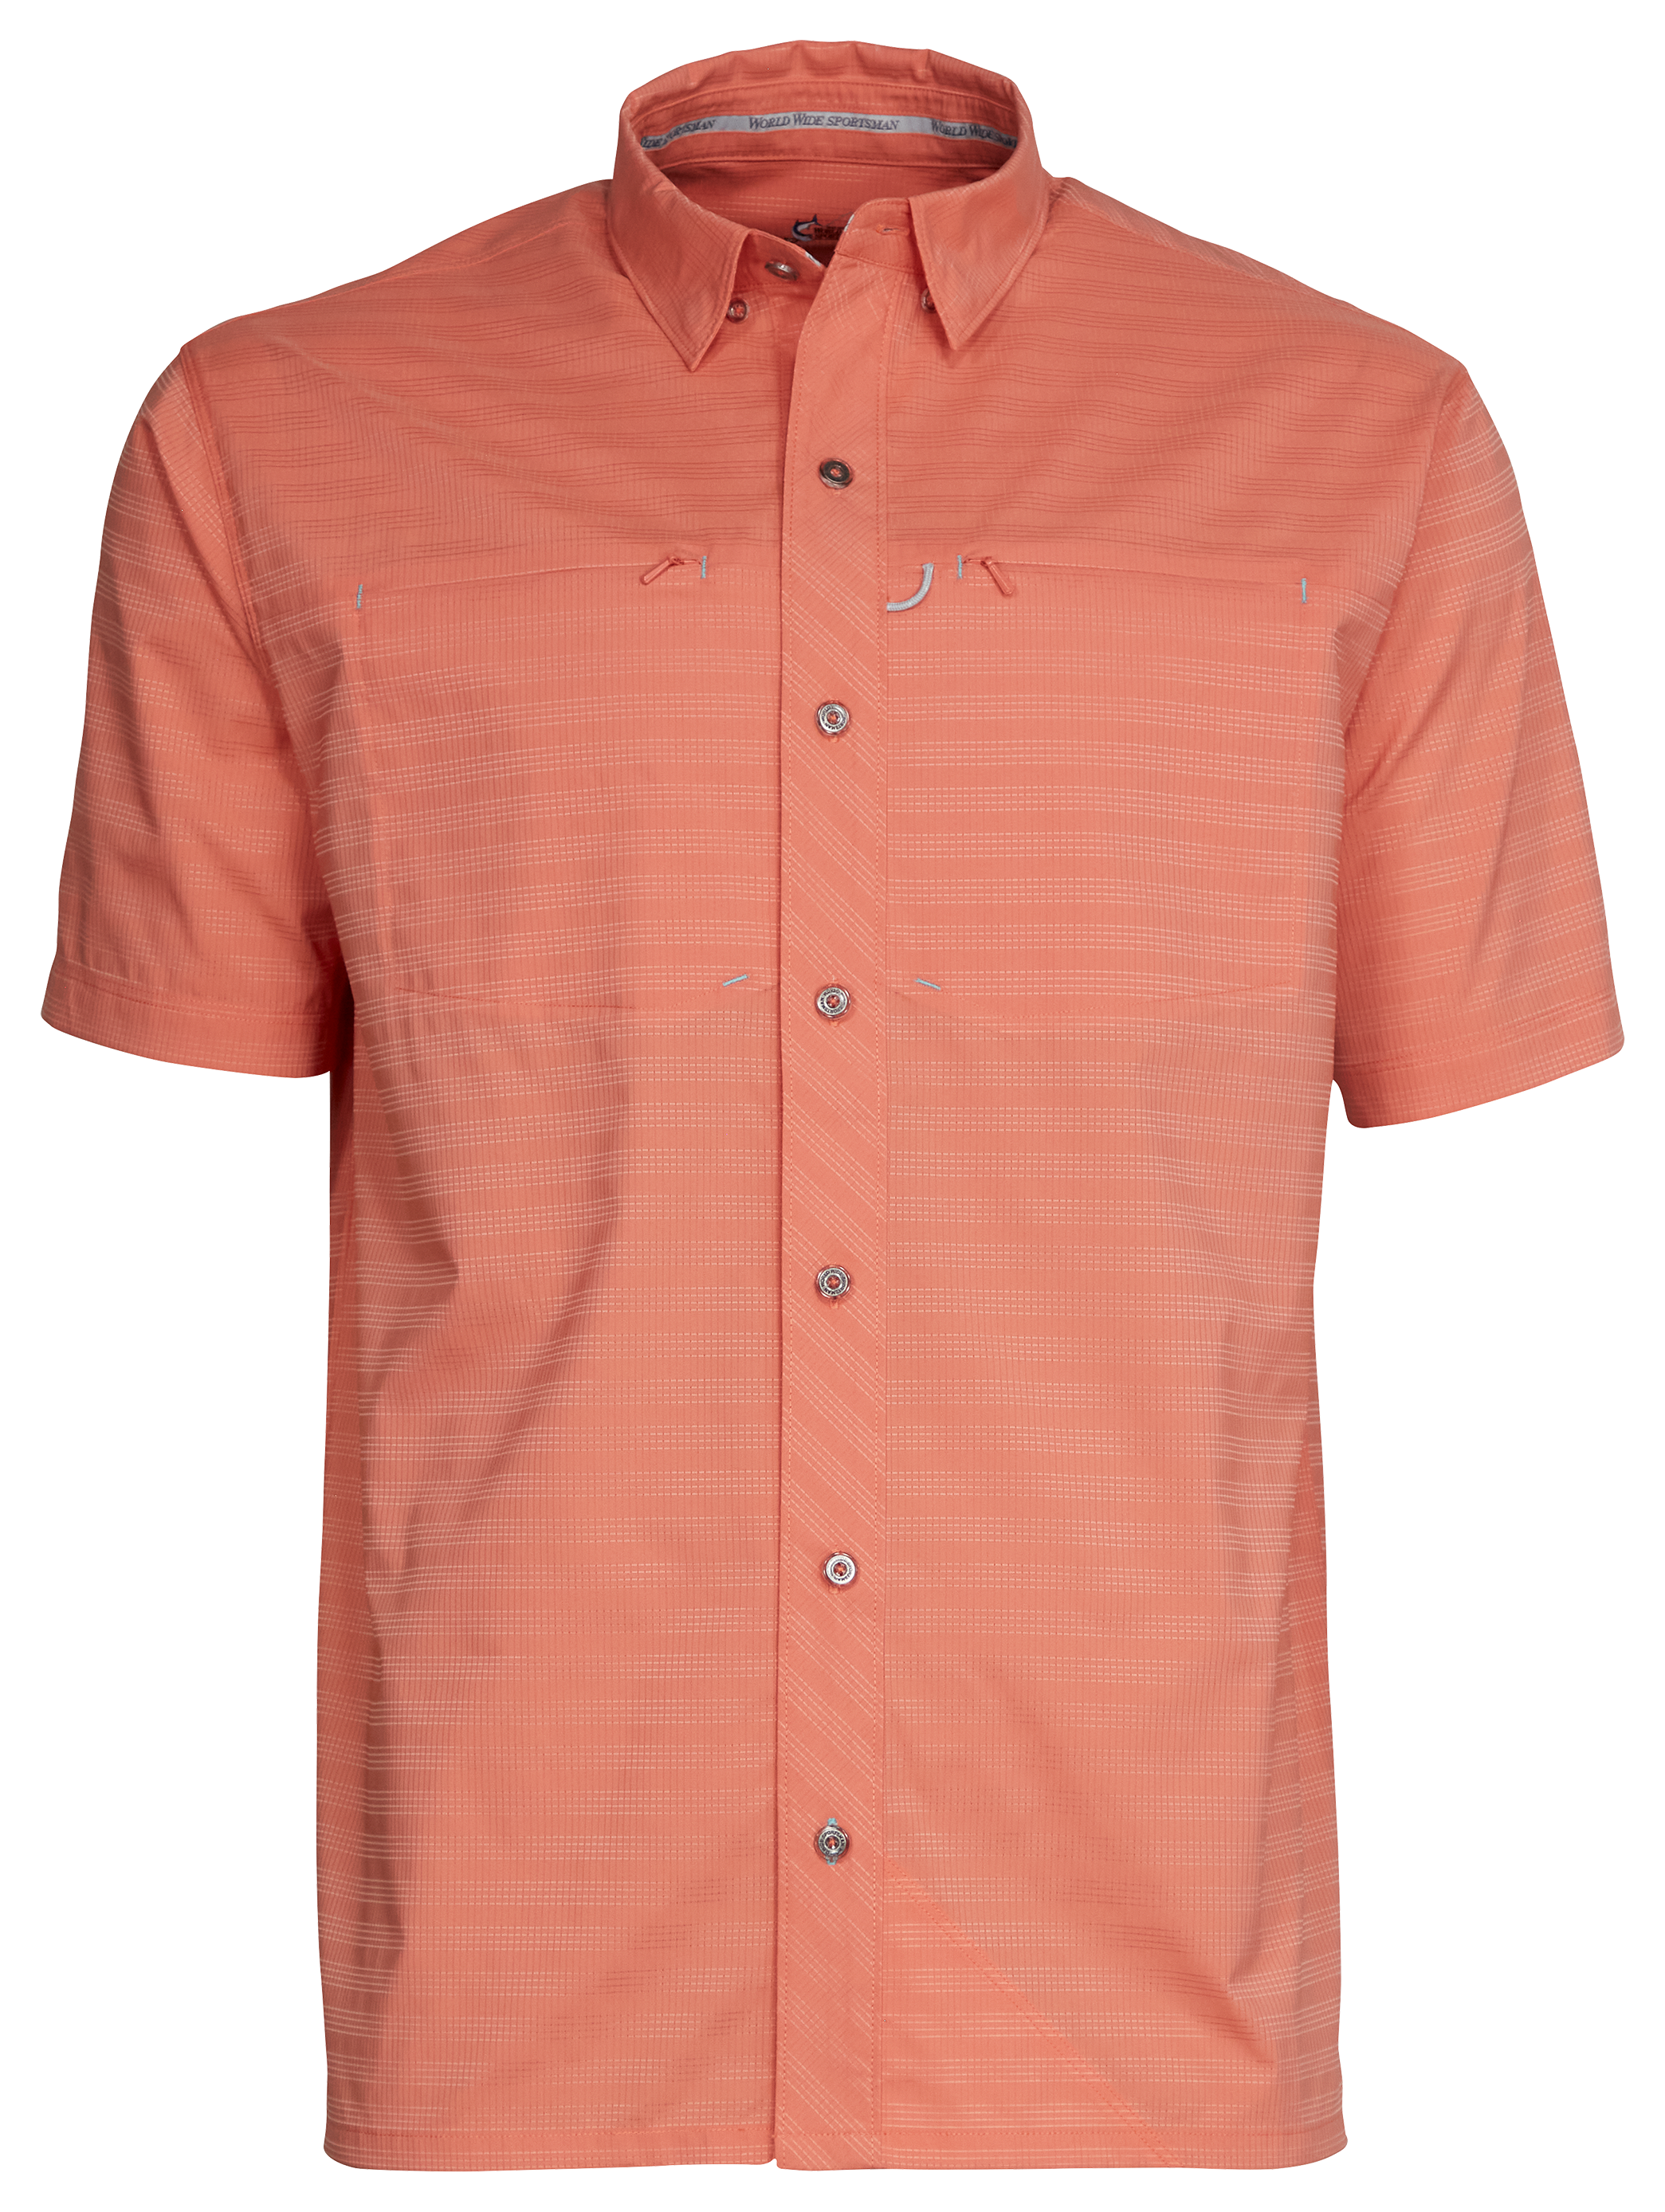 World Wide Sportsman Seacrest 2-Pocket Short-Sleeve Button-Down Shirt for Men - Crabapple - M